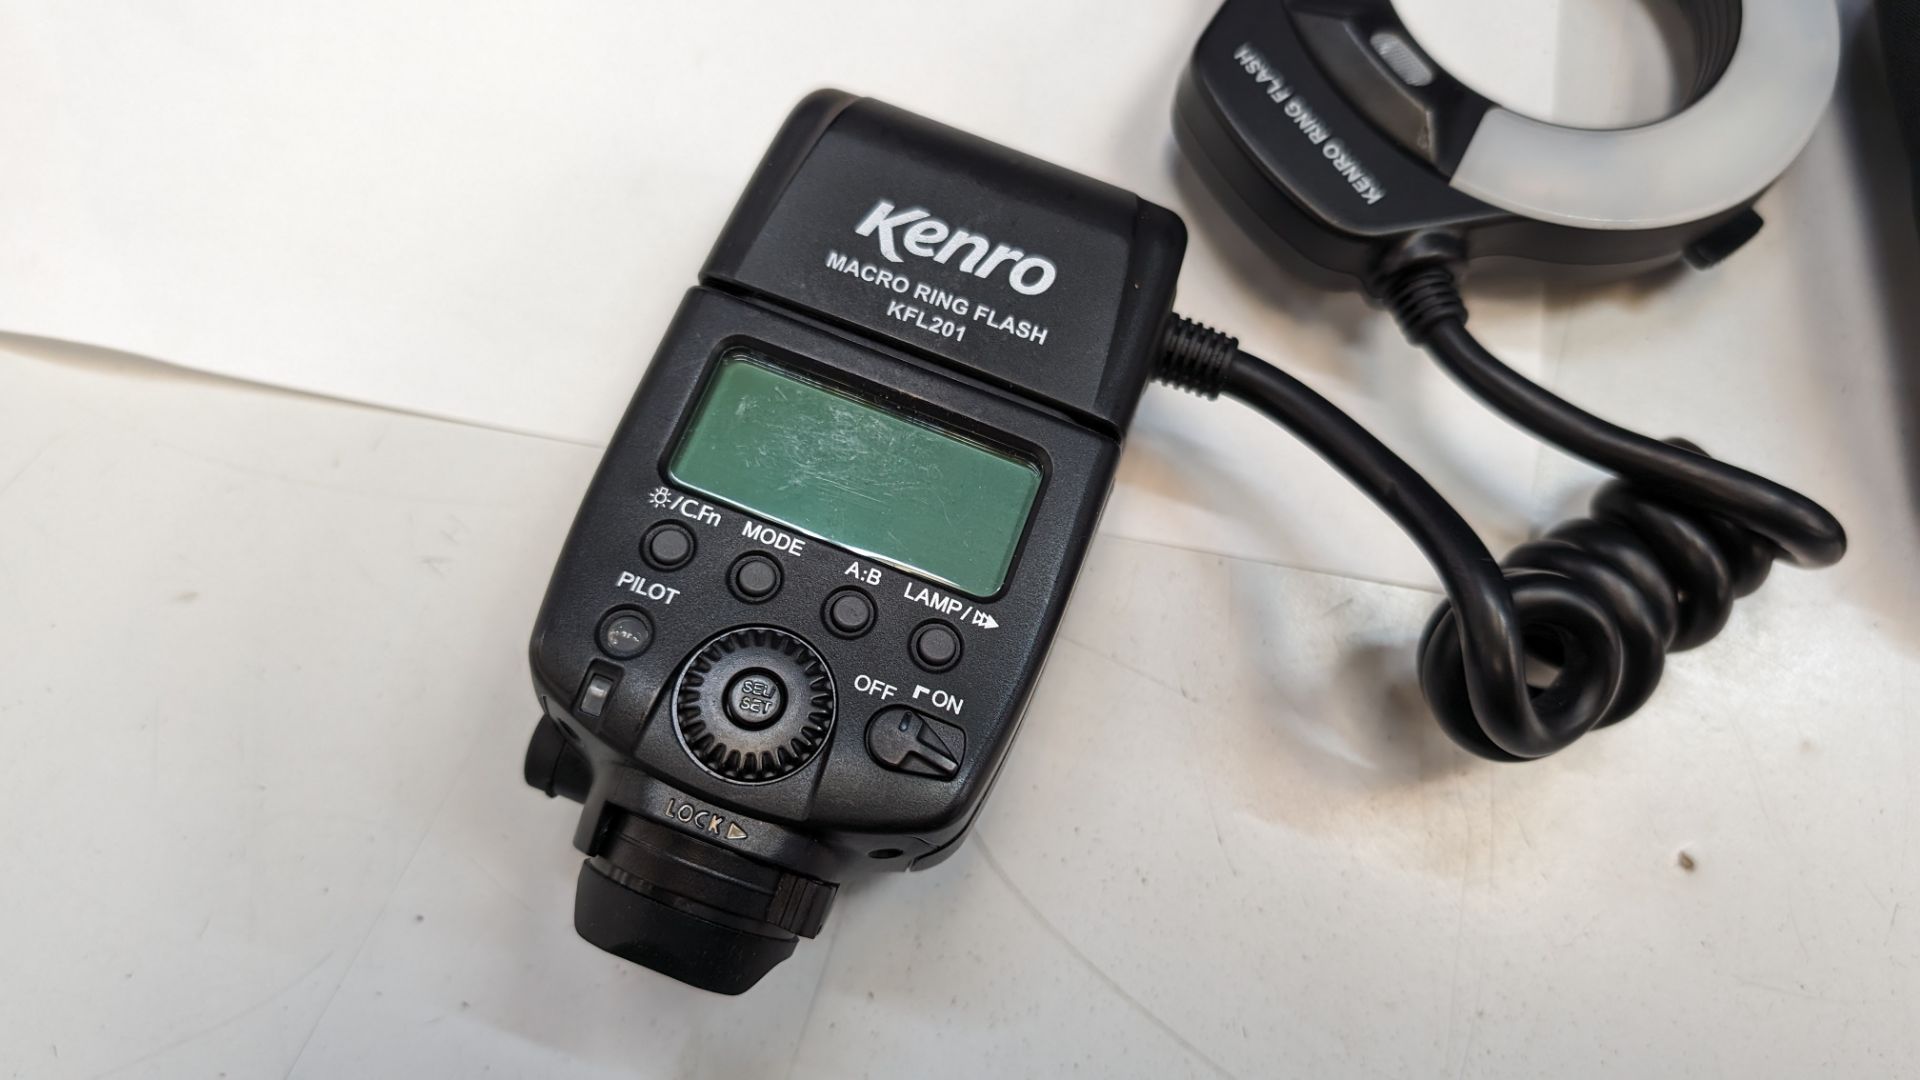 Kenro macro ring flash model KFL201 with carry bag - Bild 6 aus 10